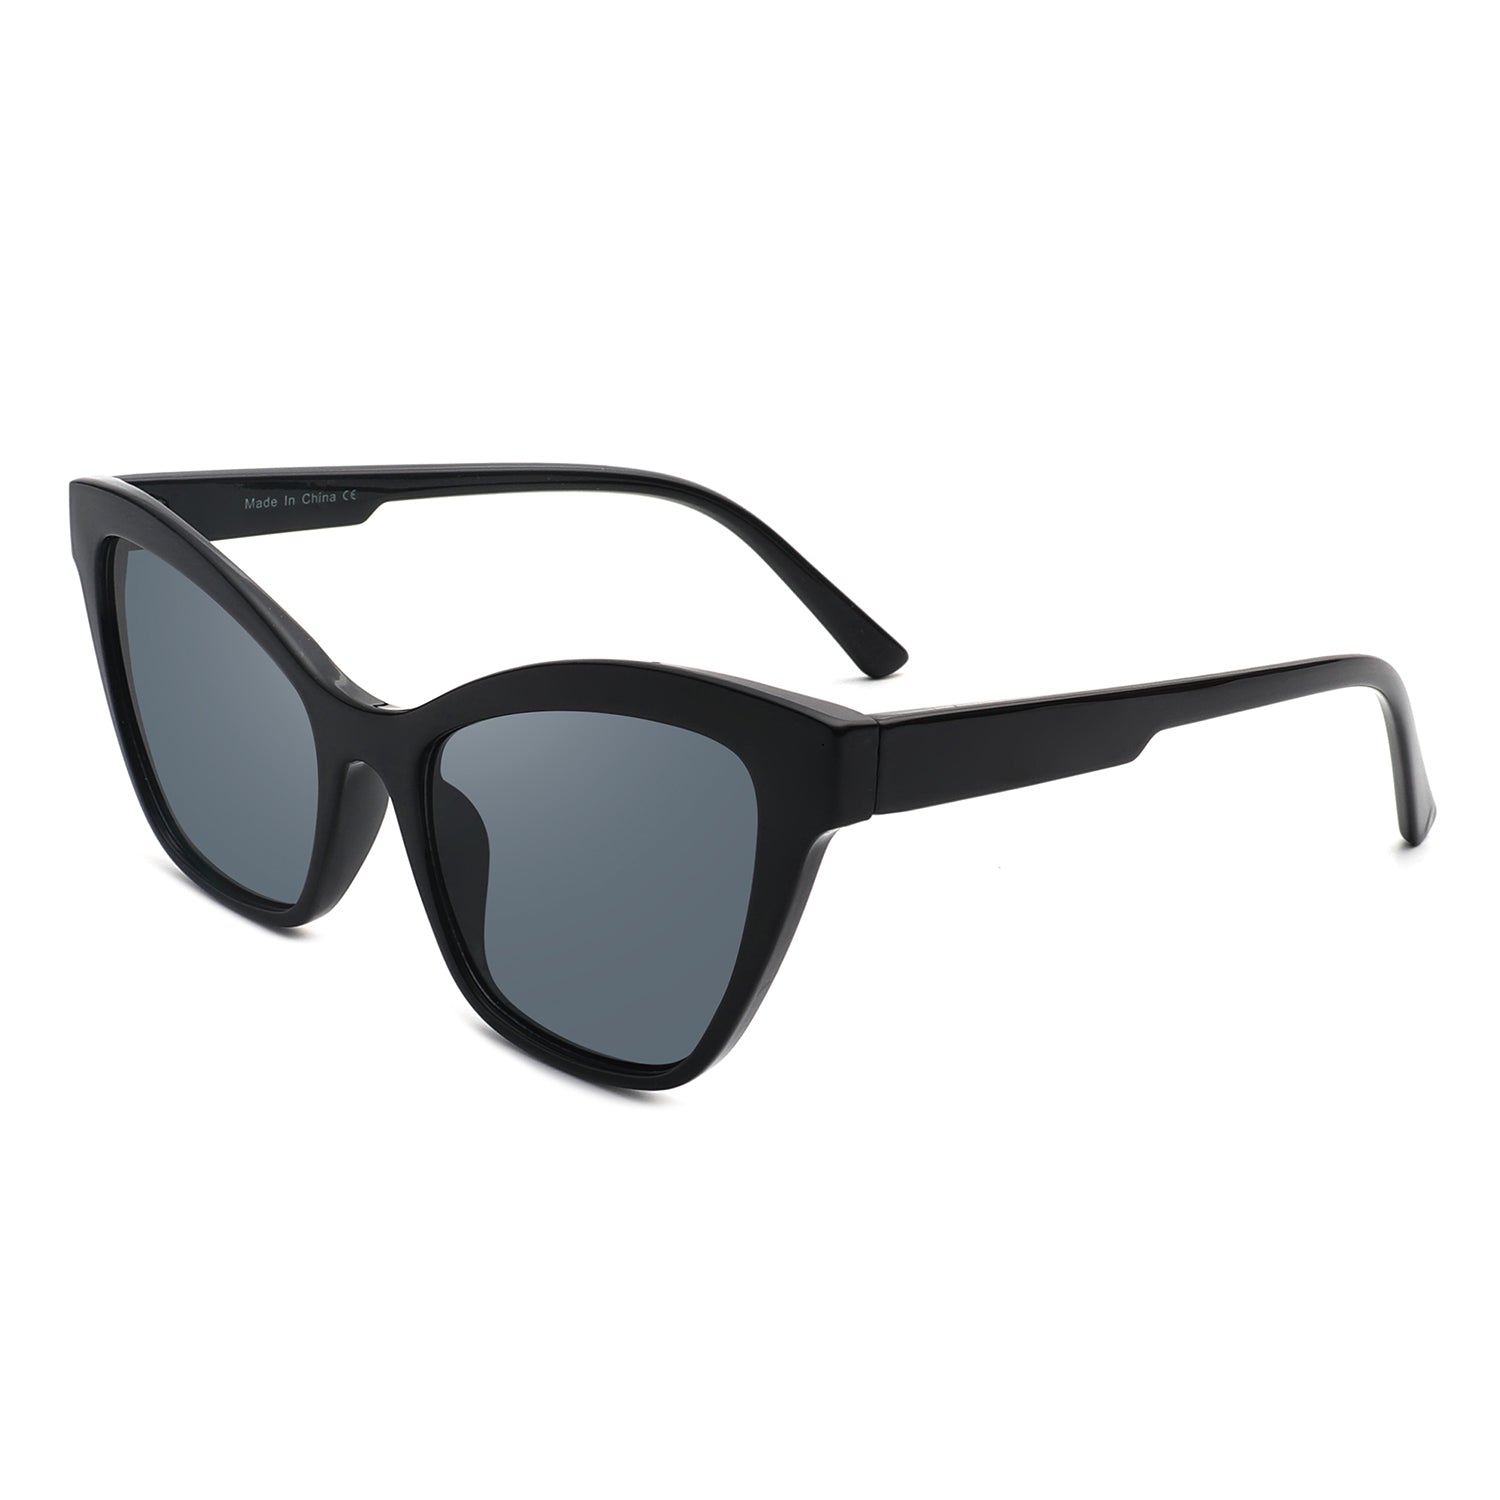 S1171 - Women Vintage High Pointed Cat Eye Fashion Retro Sunglasses